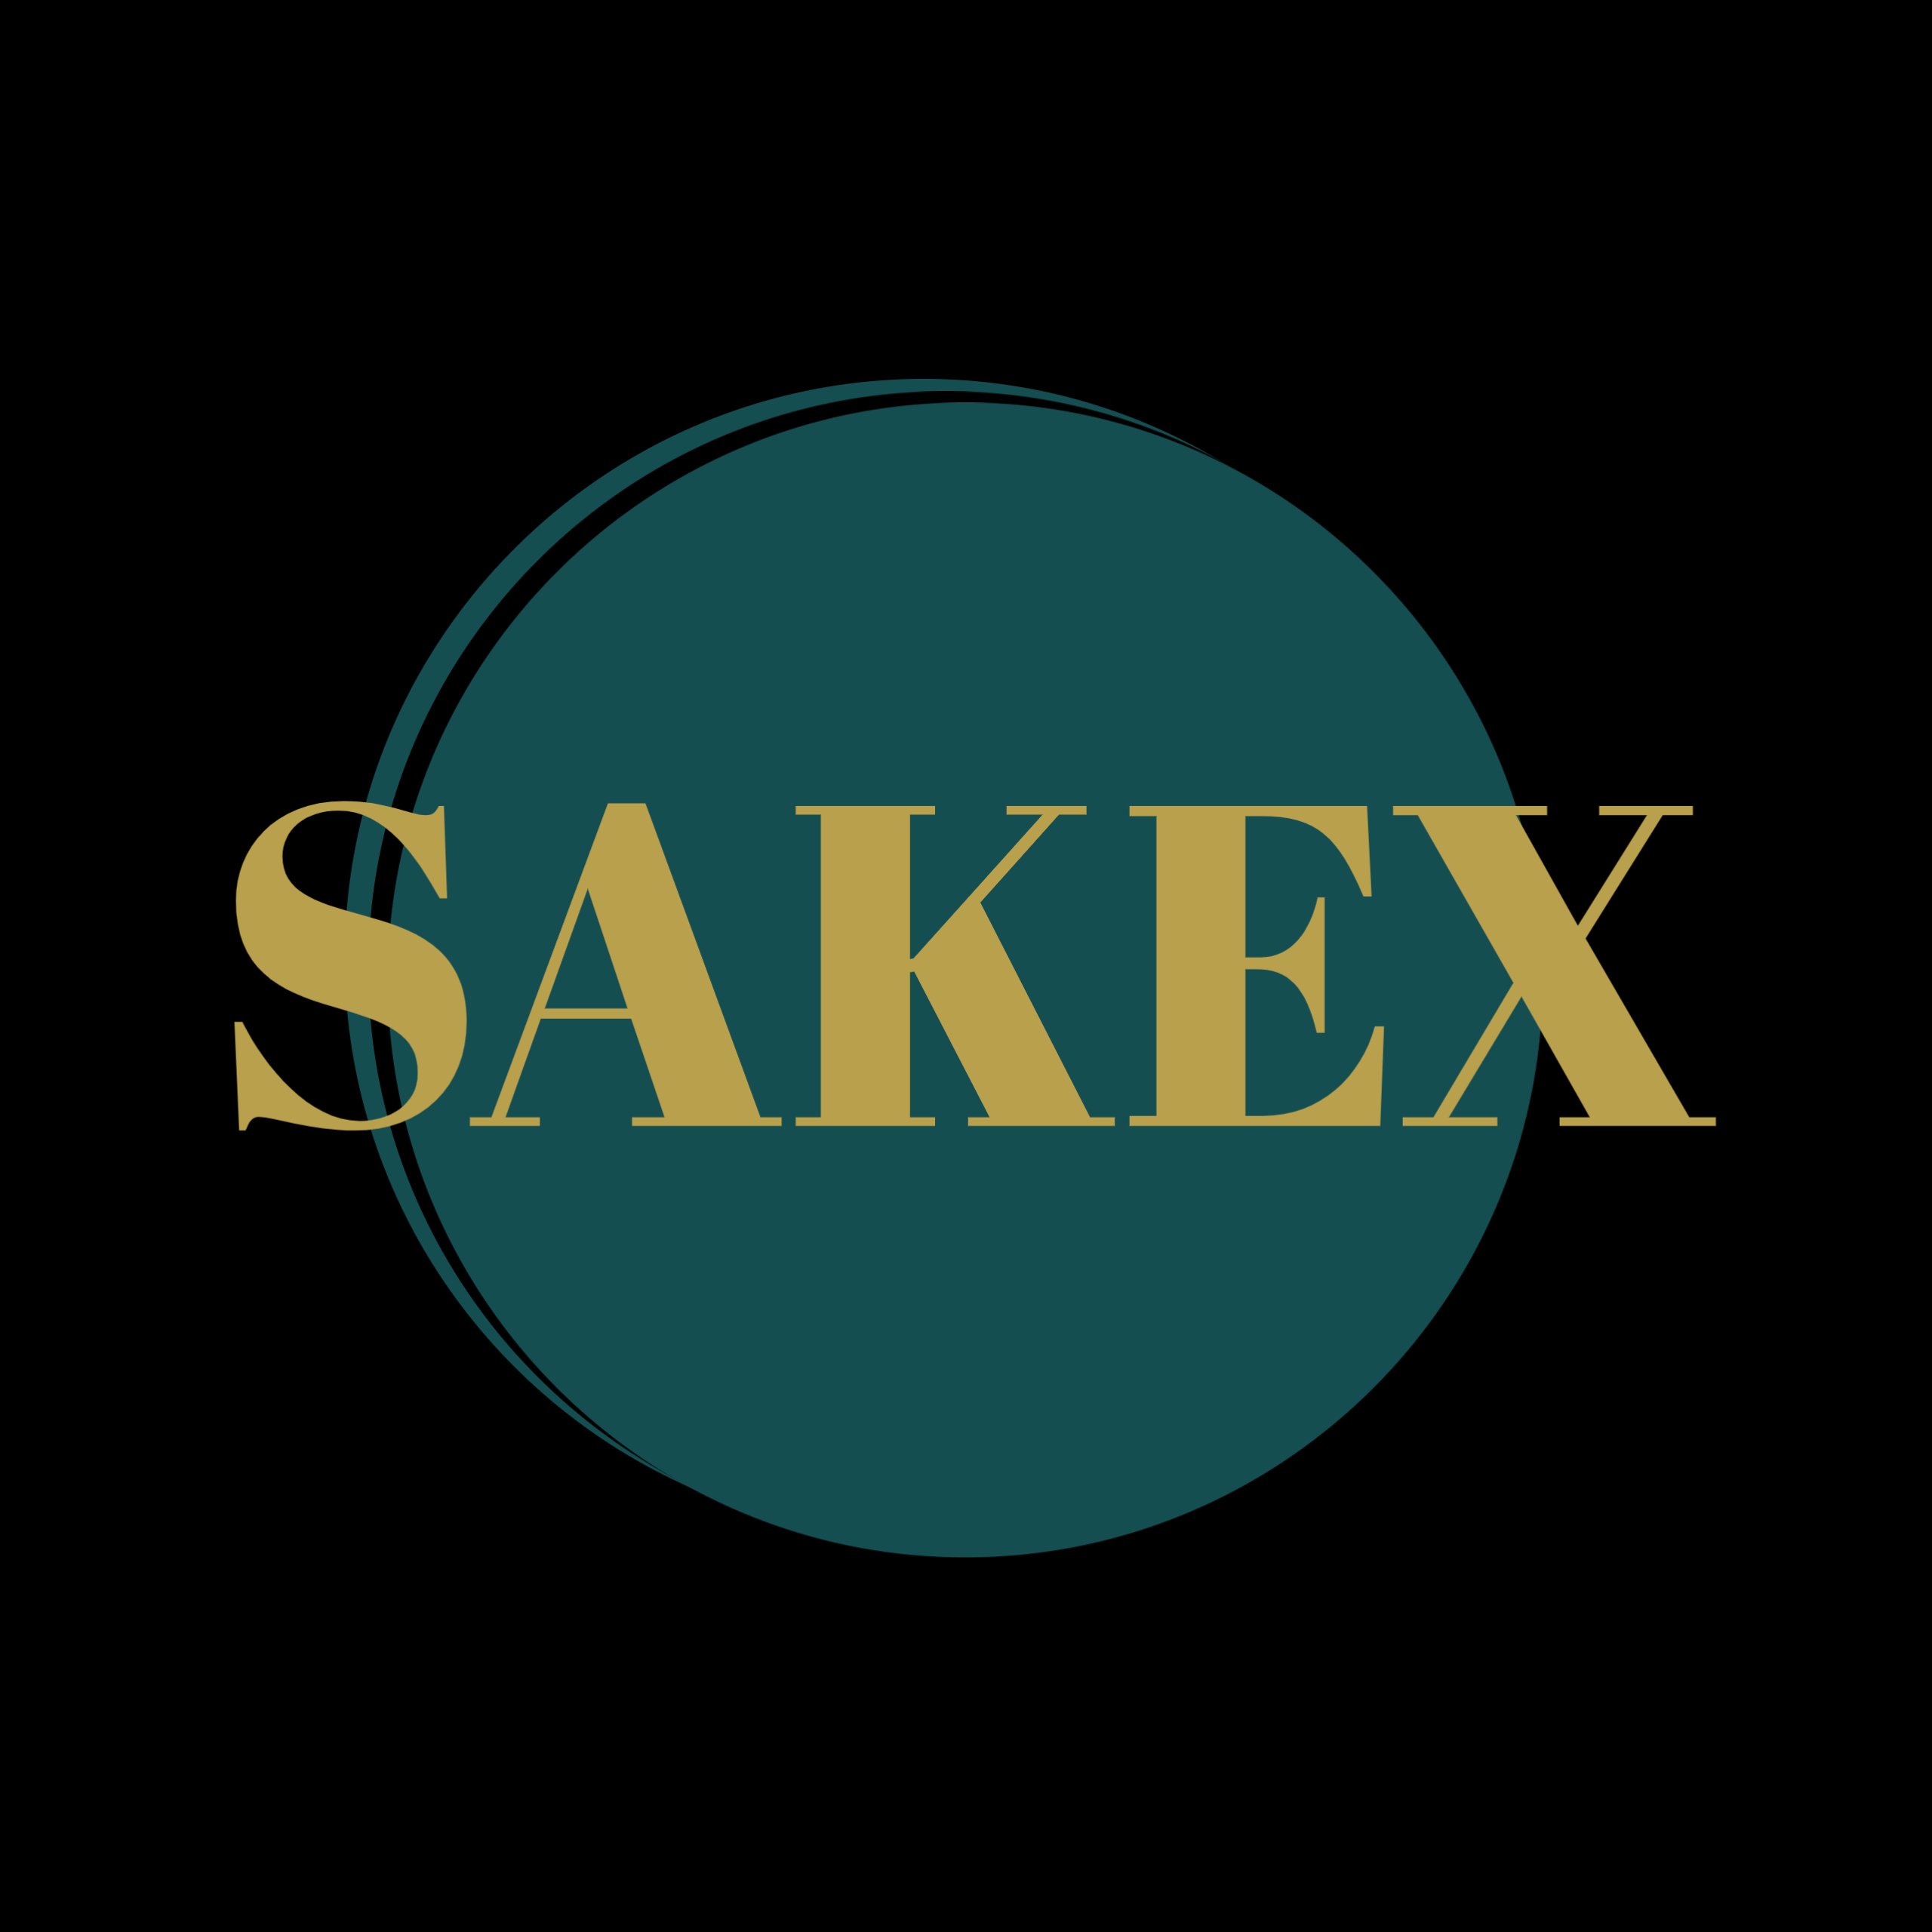 SAKEX